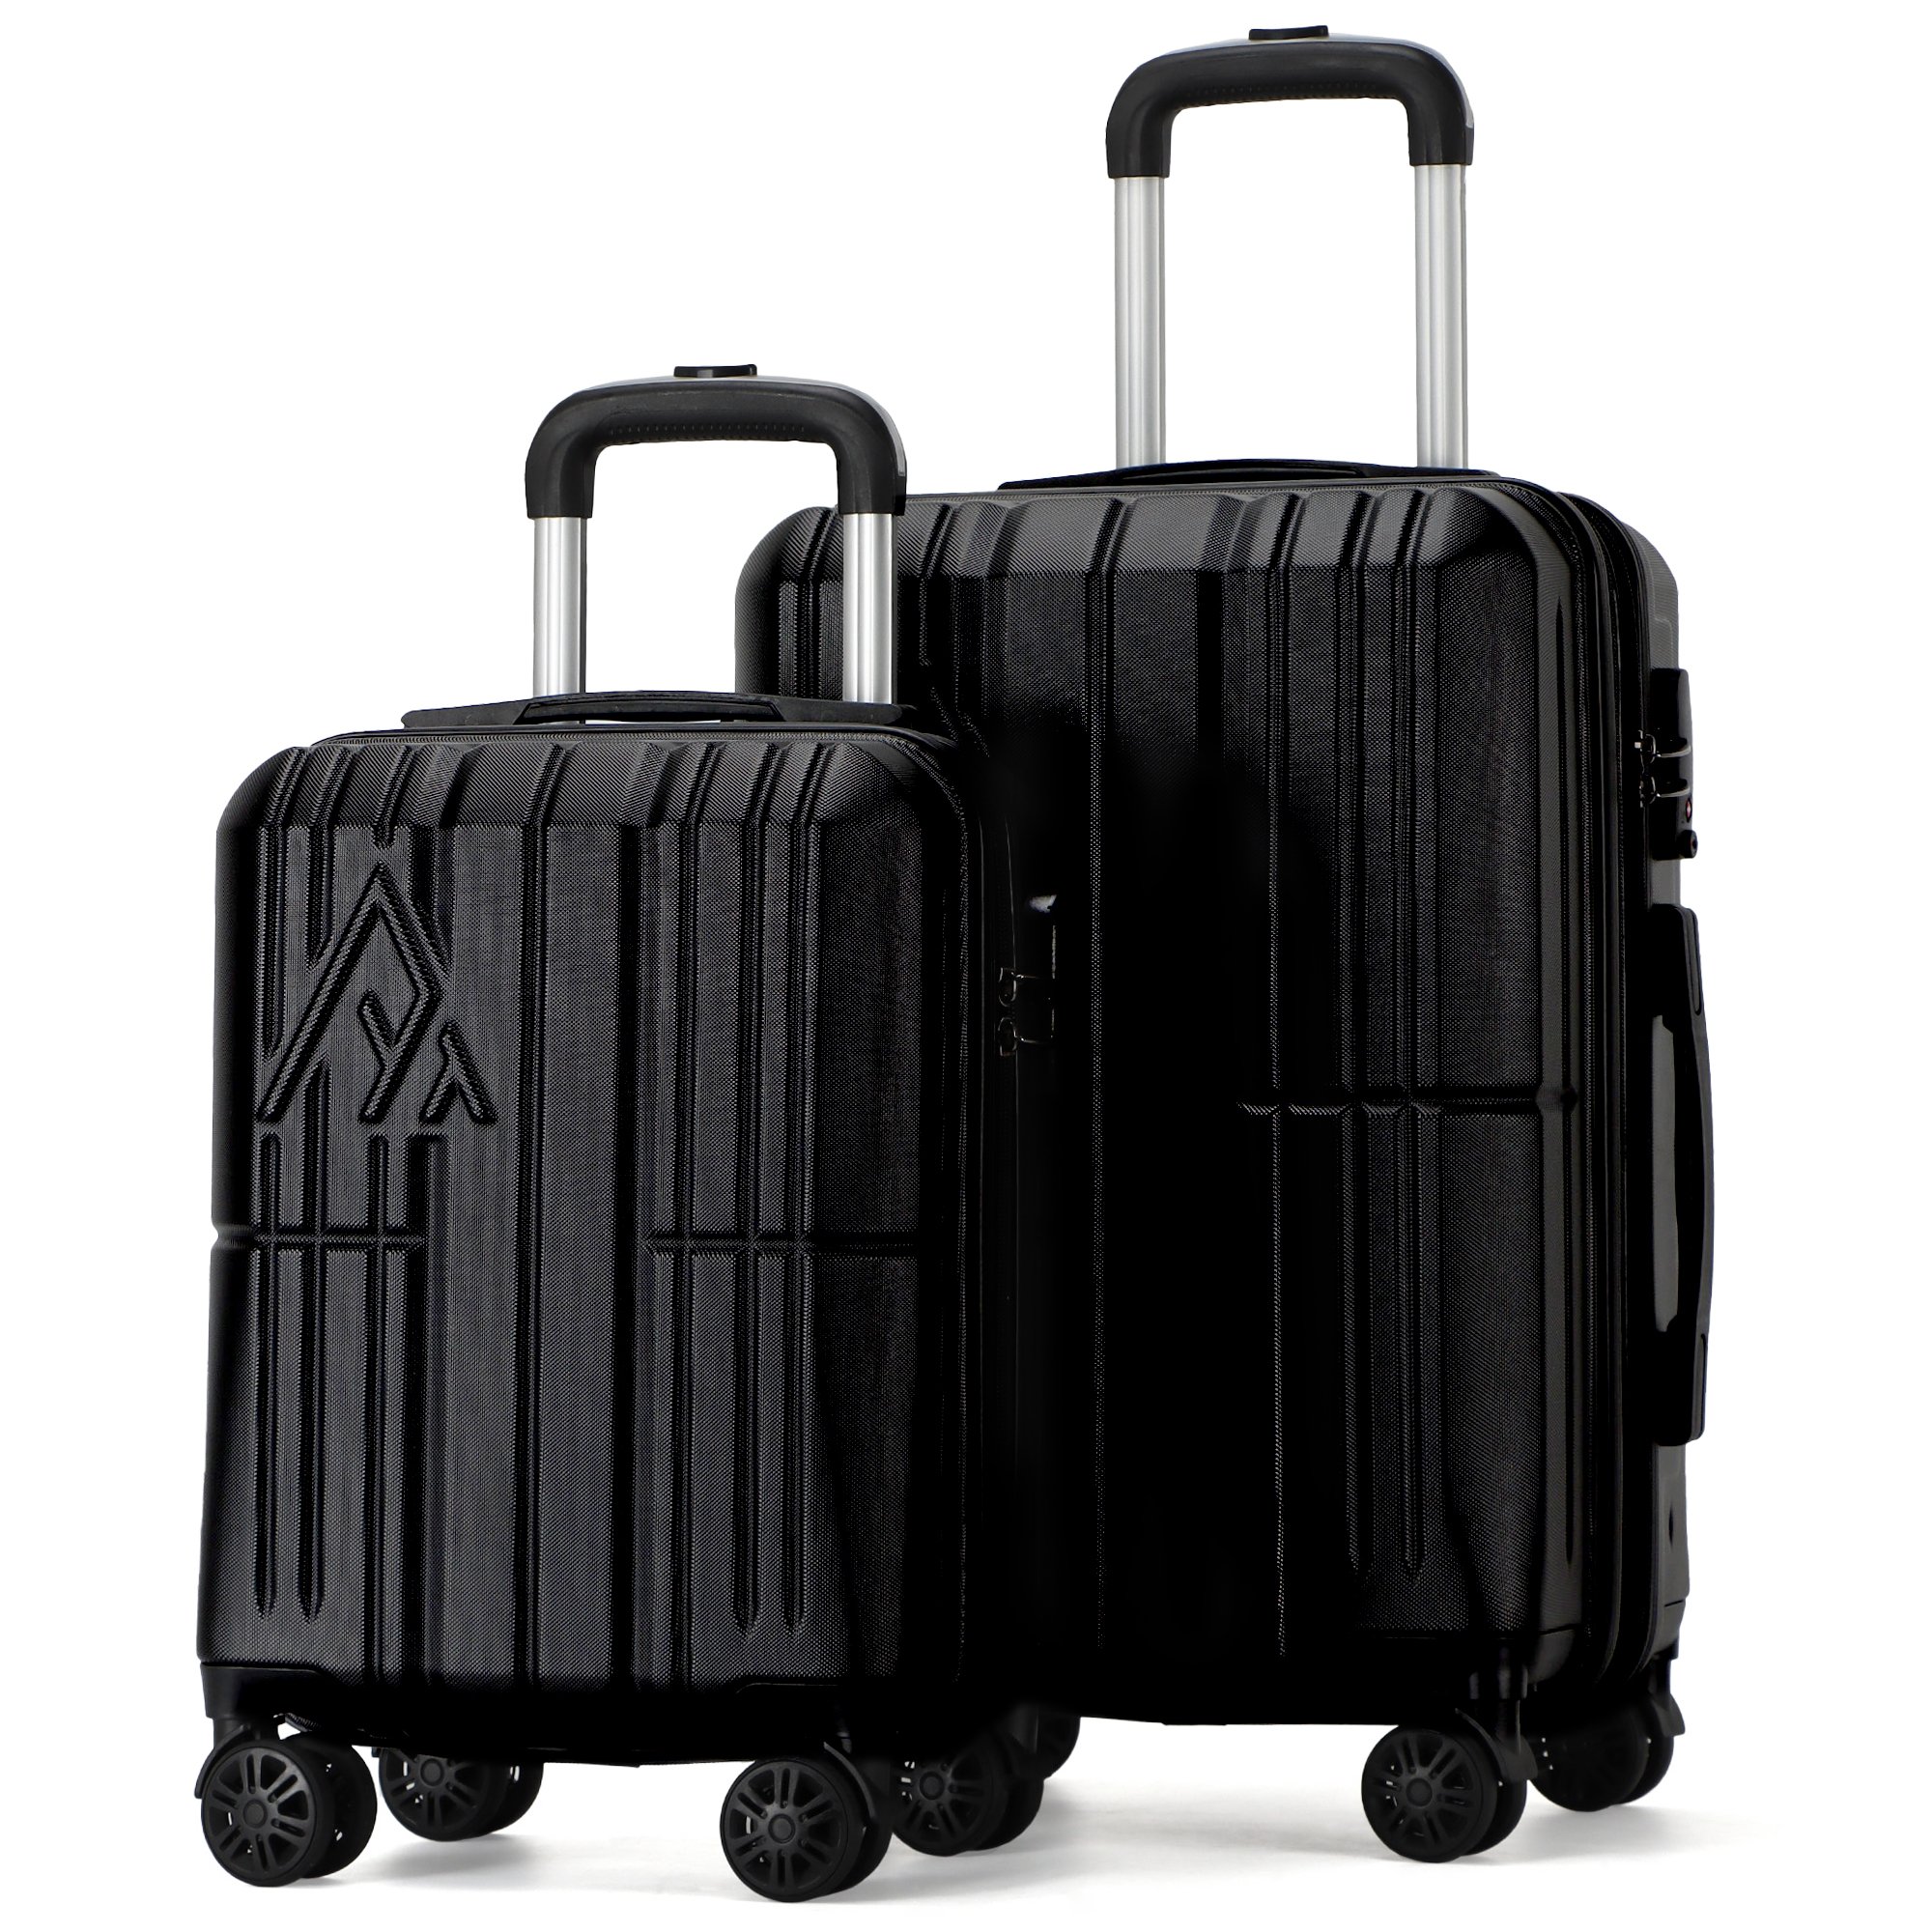  Aoun Maleta pequeña de mano con ruedas, maleta de viaje ligera  rígida con bloqueo TSA, equipaje de 8 ruedas giratorias, equipaje fácil de  viajar, equipaje rodante pequeño (negro y blanco, 18